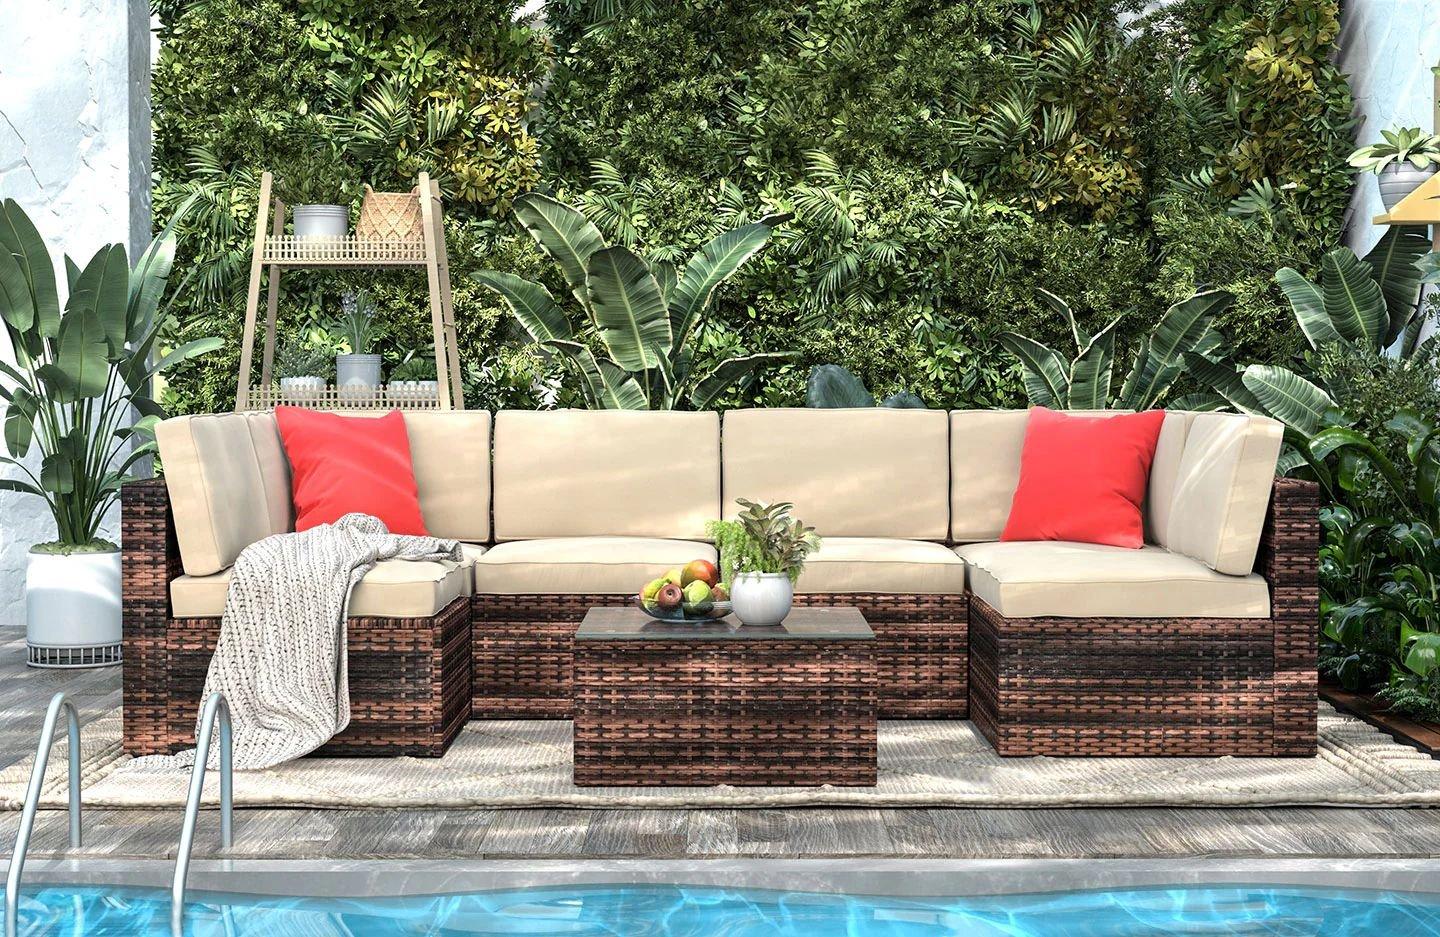 6 Seater Garden Furniture Set,Wicker Weave Corner Sofa Seat Glass Coffee Table Conversation Set With